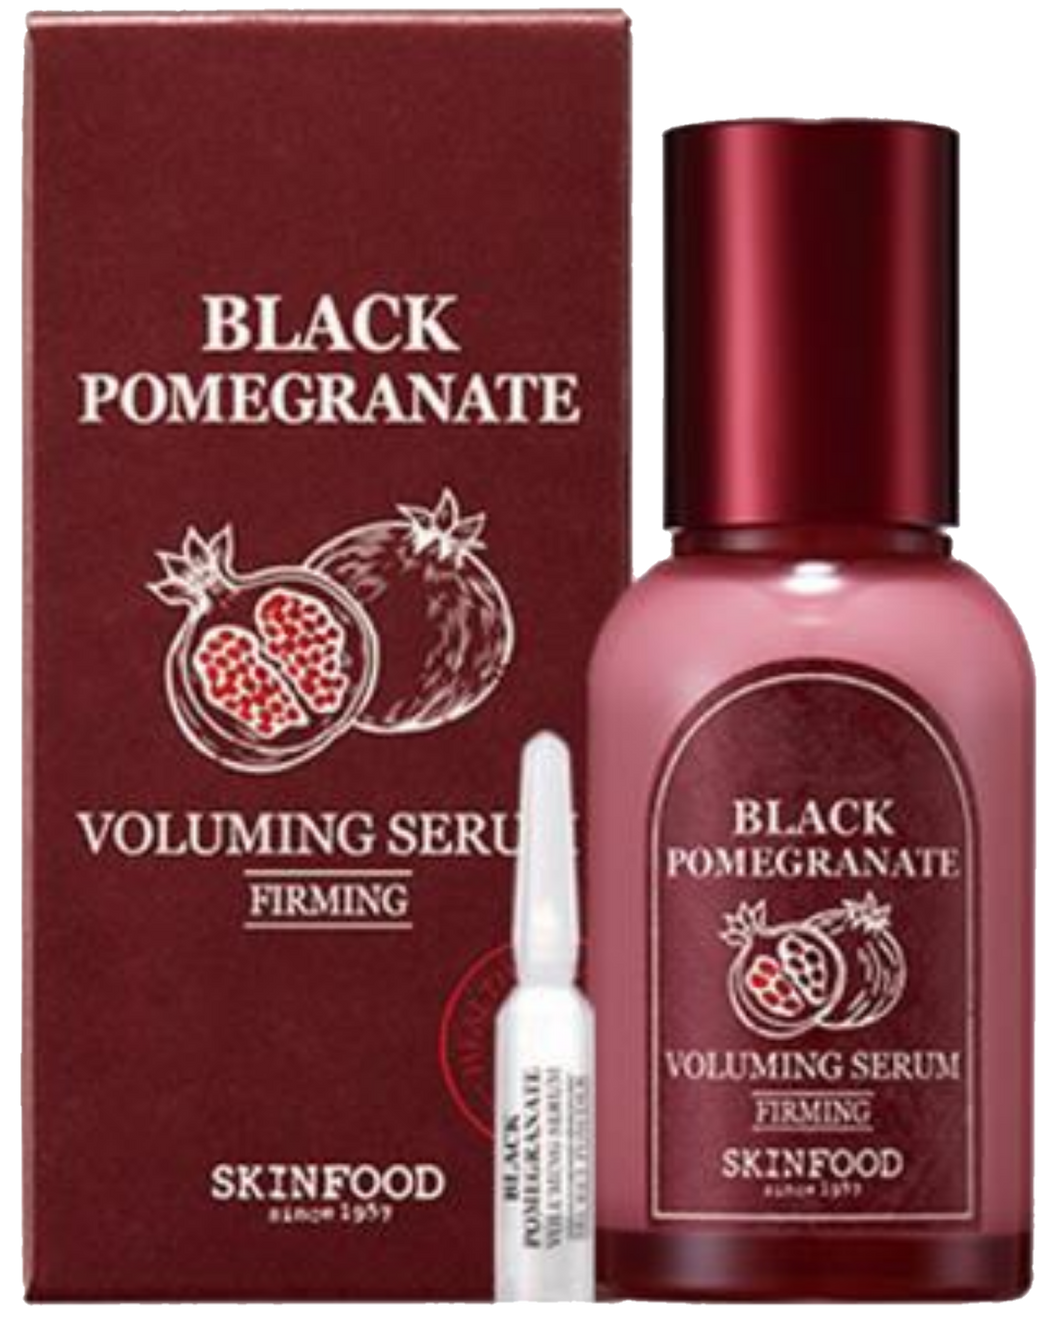 Black Pomegranate Voluming Serum